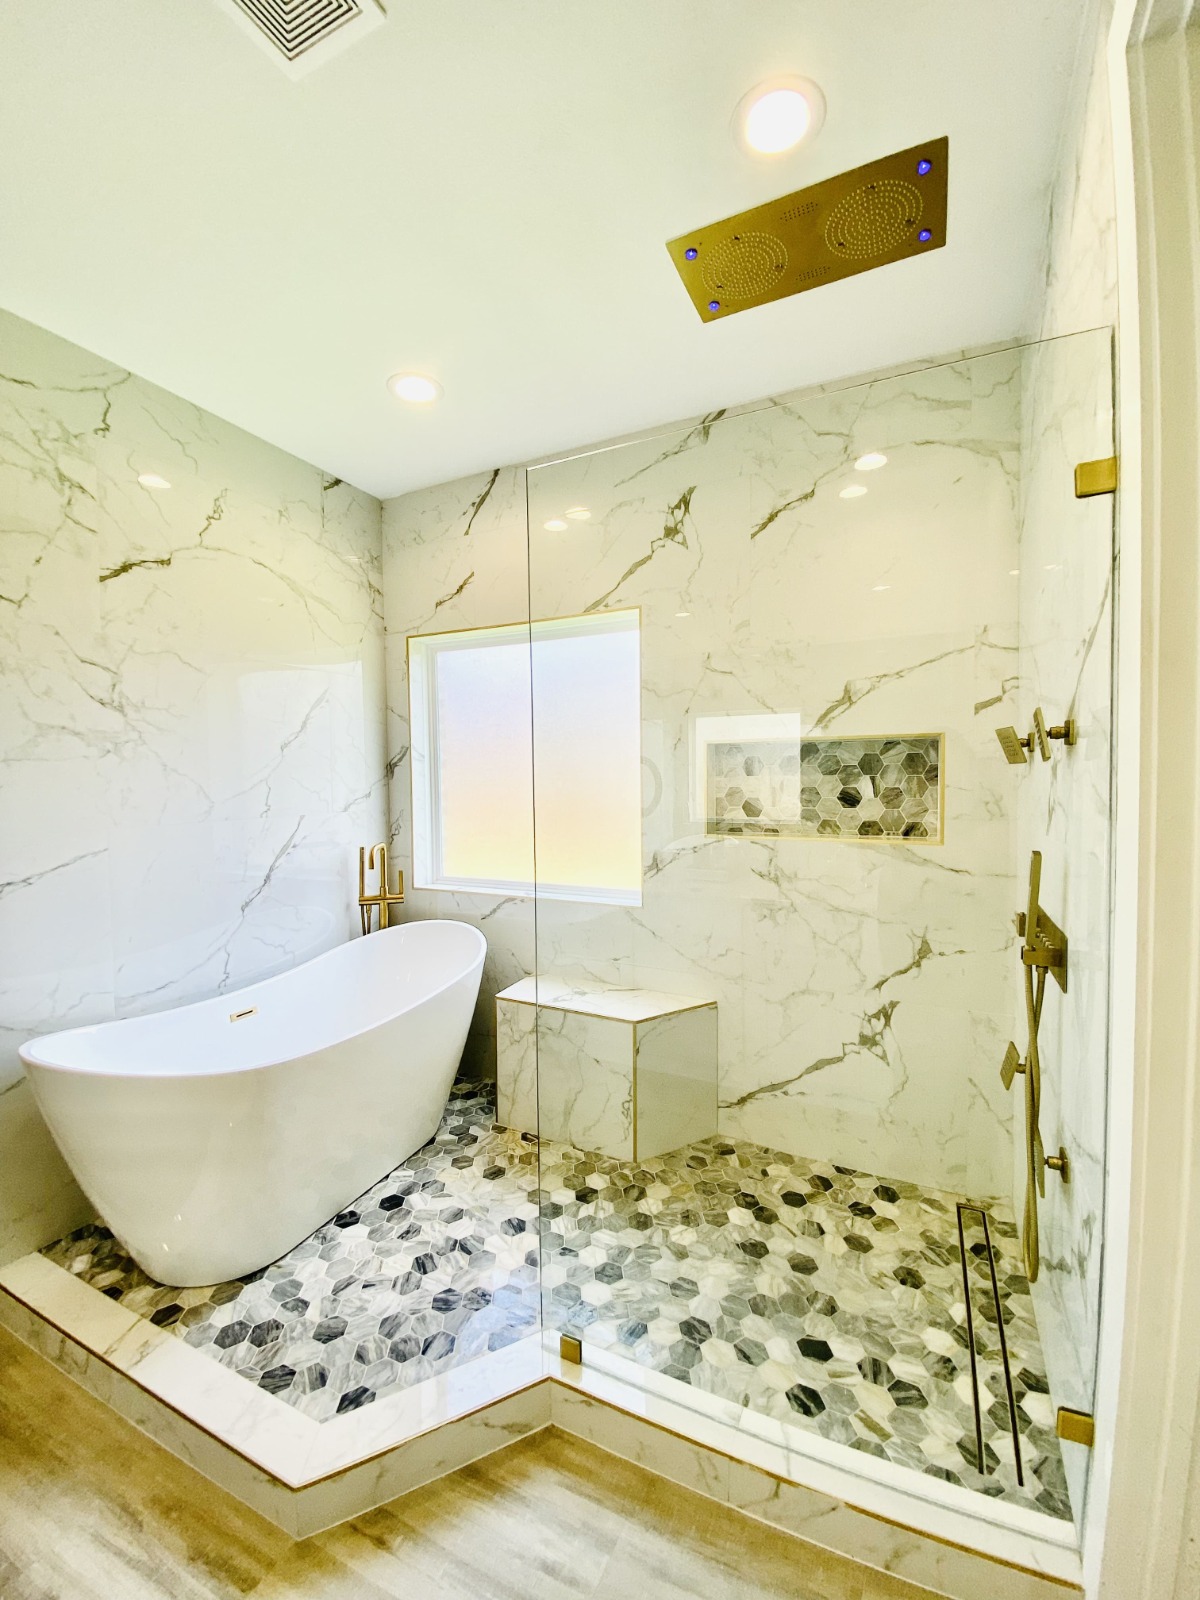 Viannis-Master-Bathroom-remodeling9